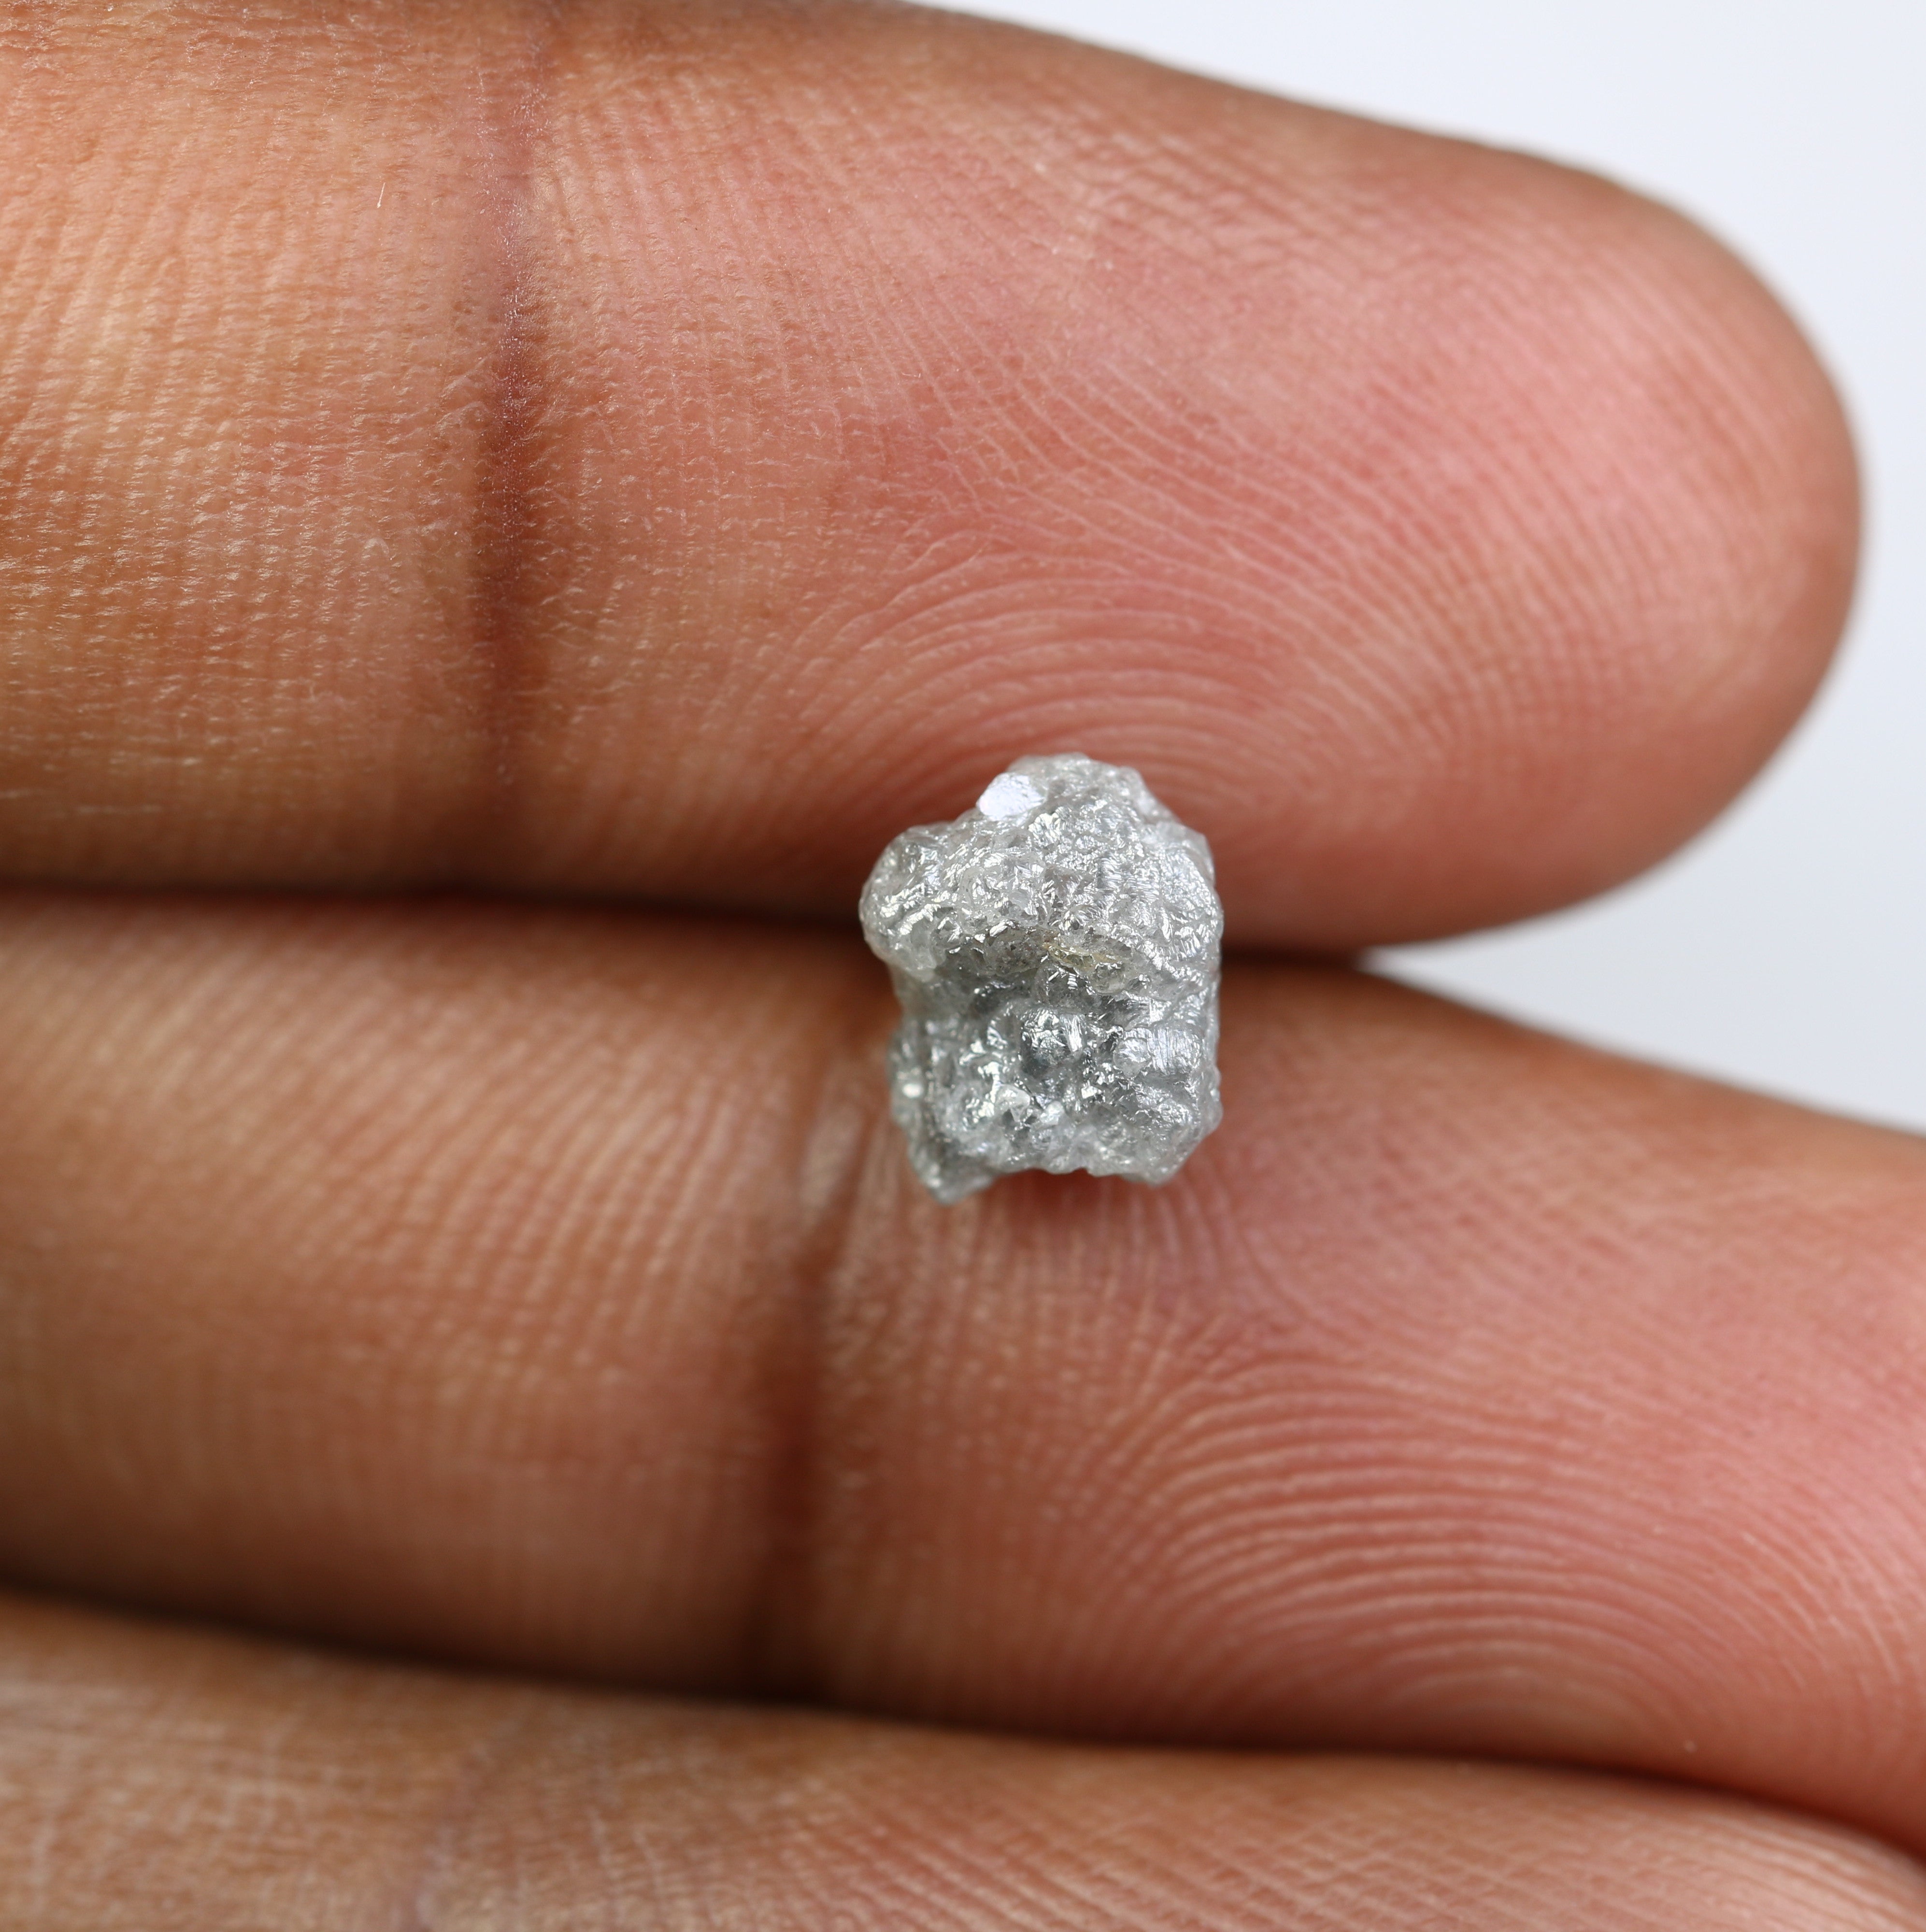 2.68 CT Irregular Cut Rough Grey Raw Diamond For Engagement Ring